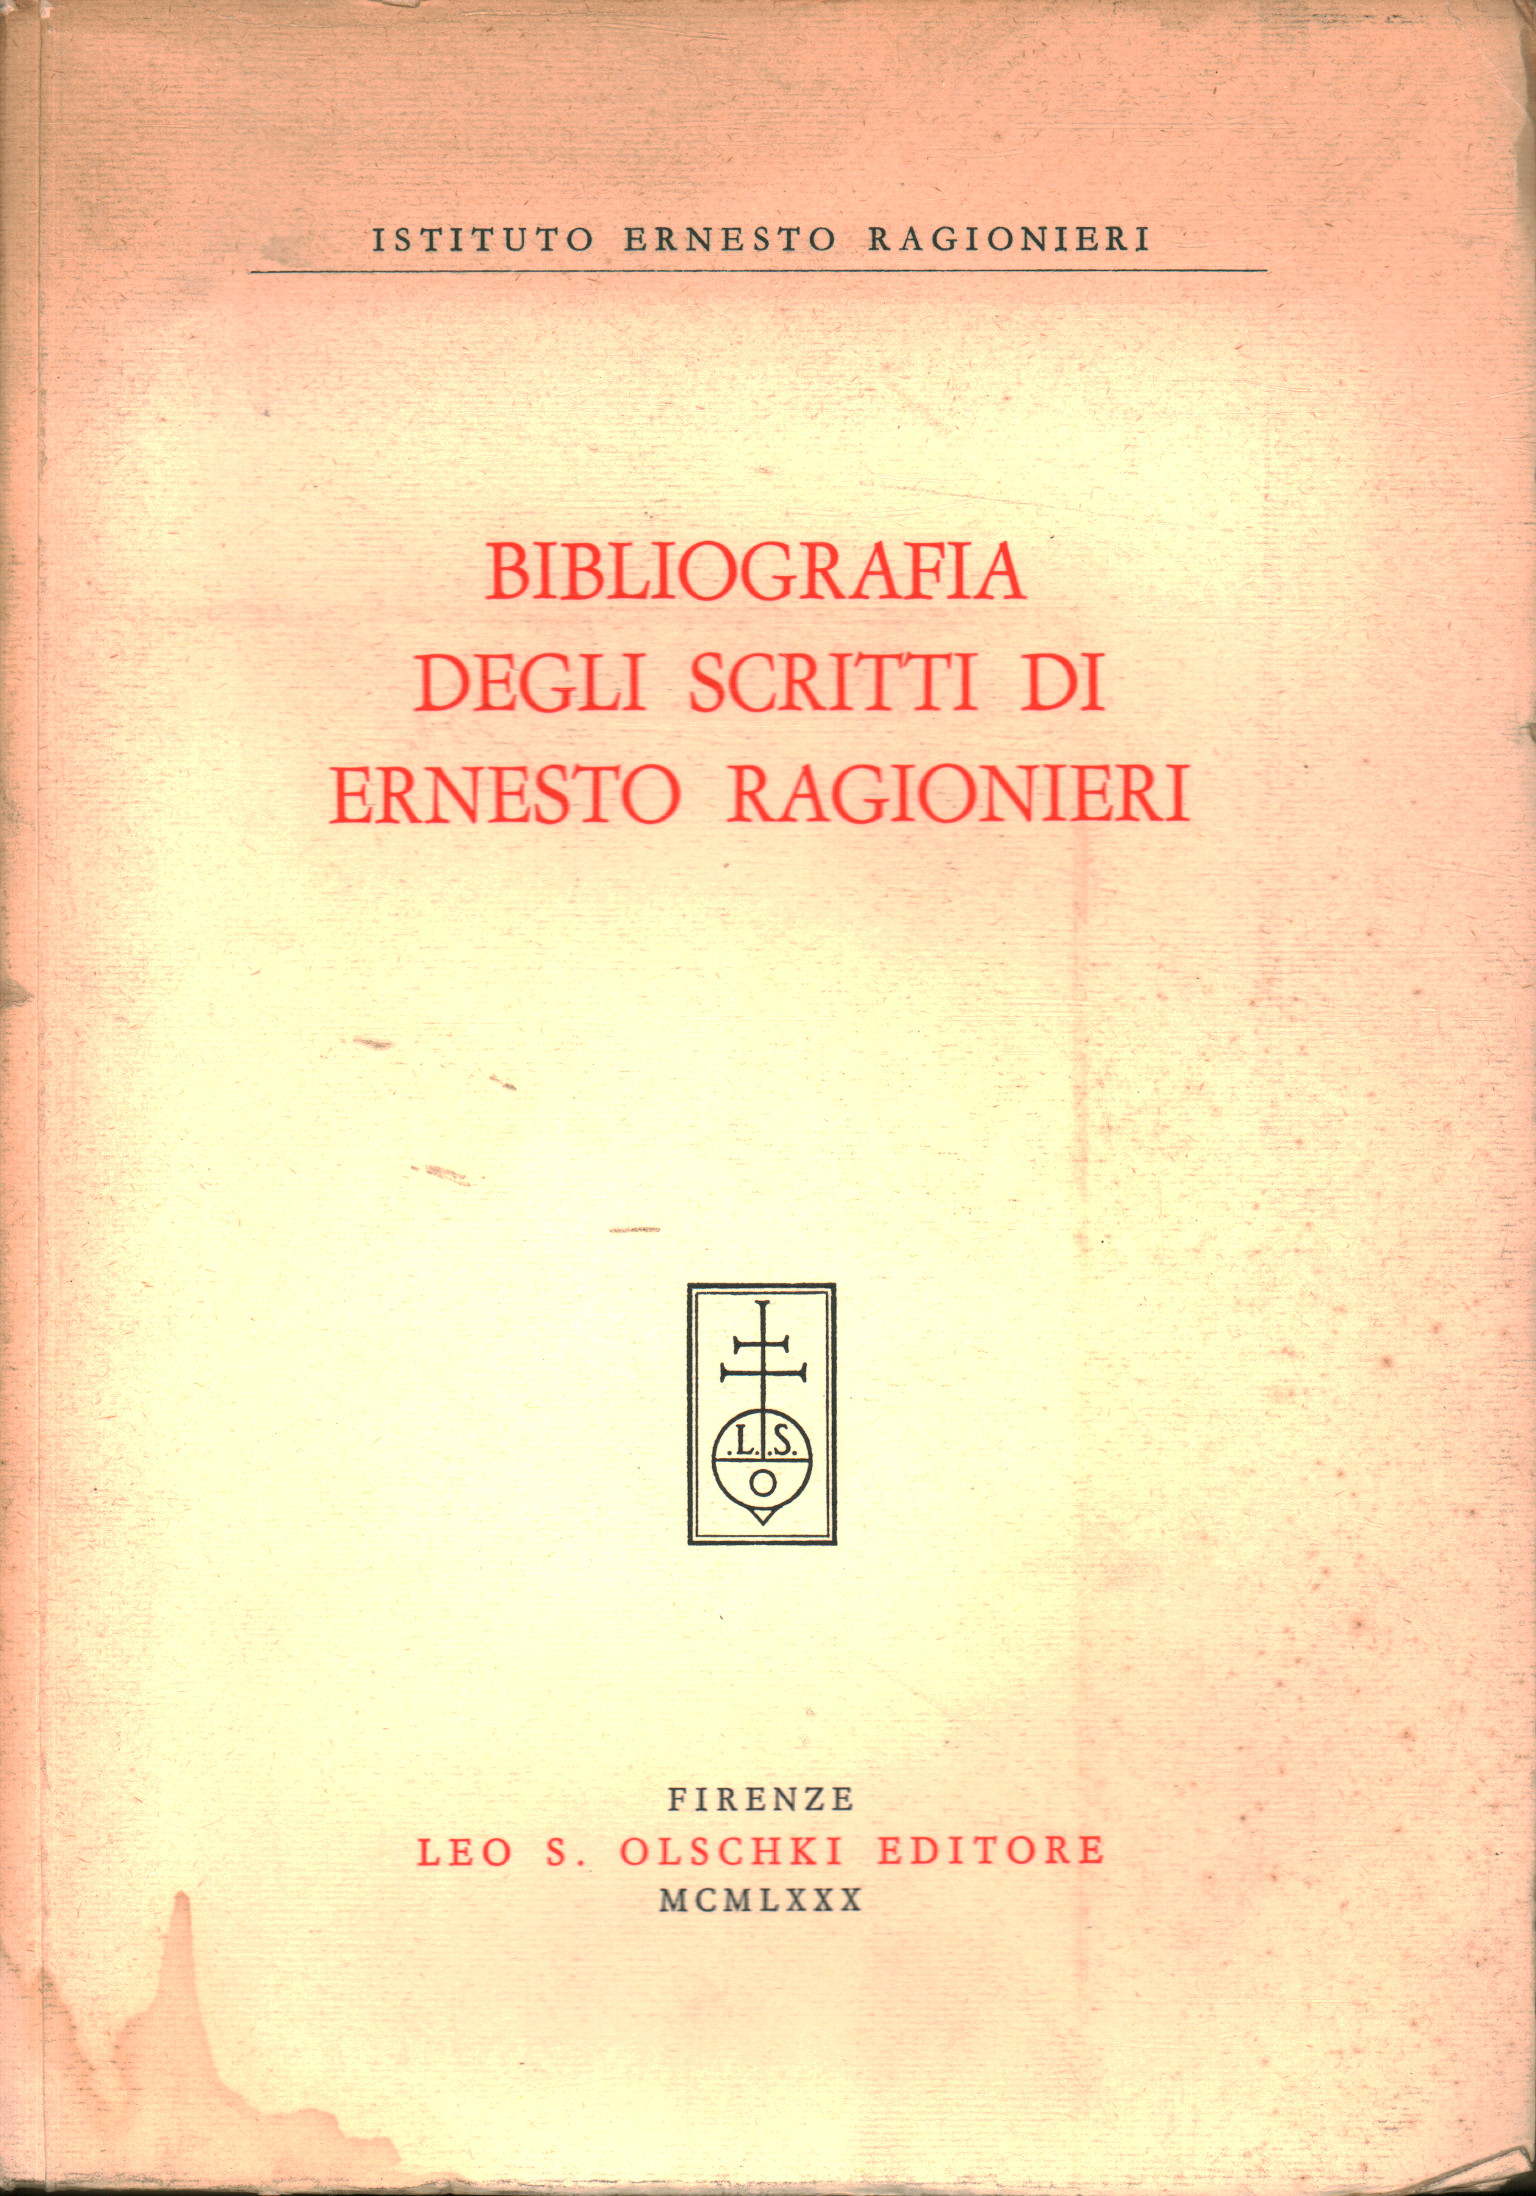 Bibliography of the writings of Ernesto Ragionieri, AA.VV